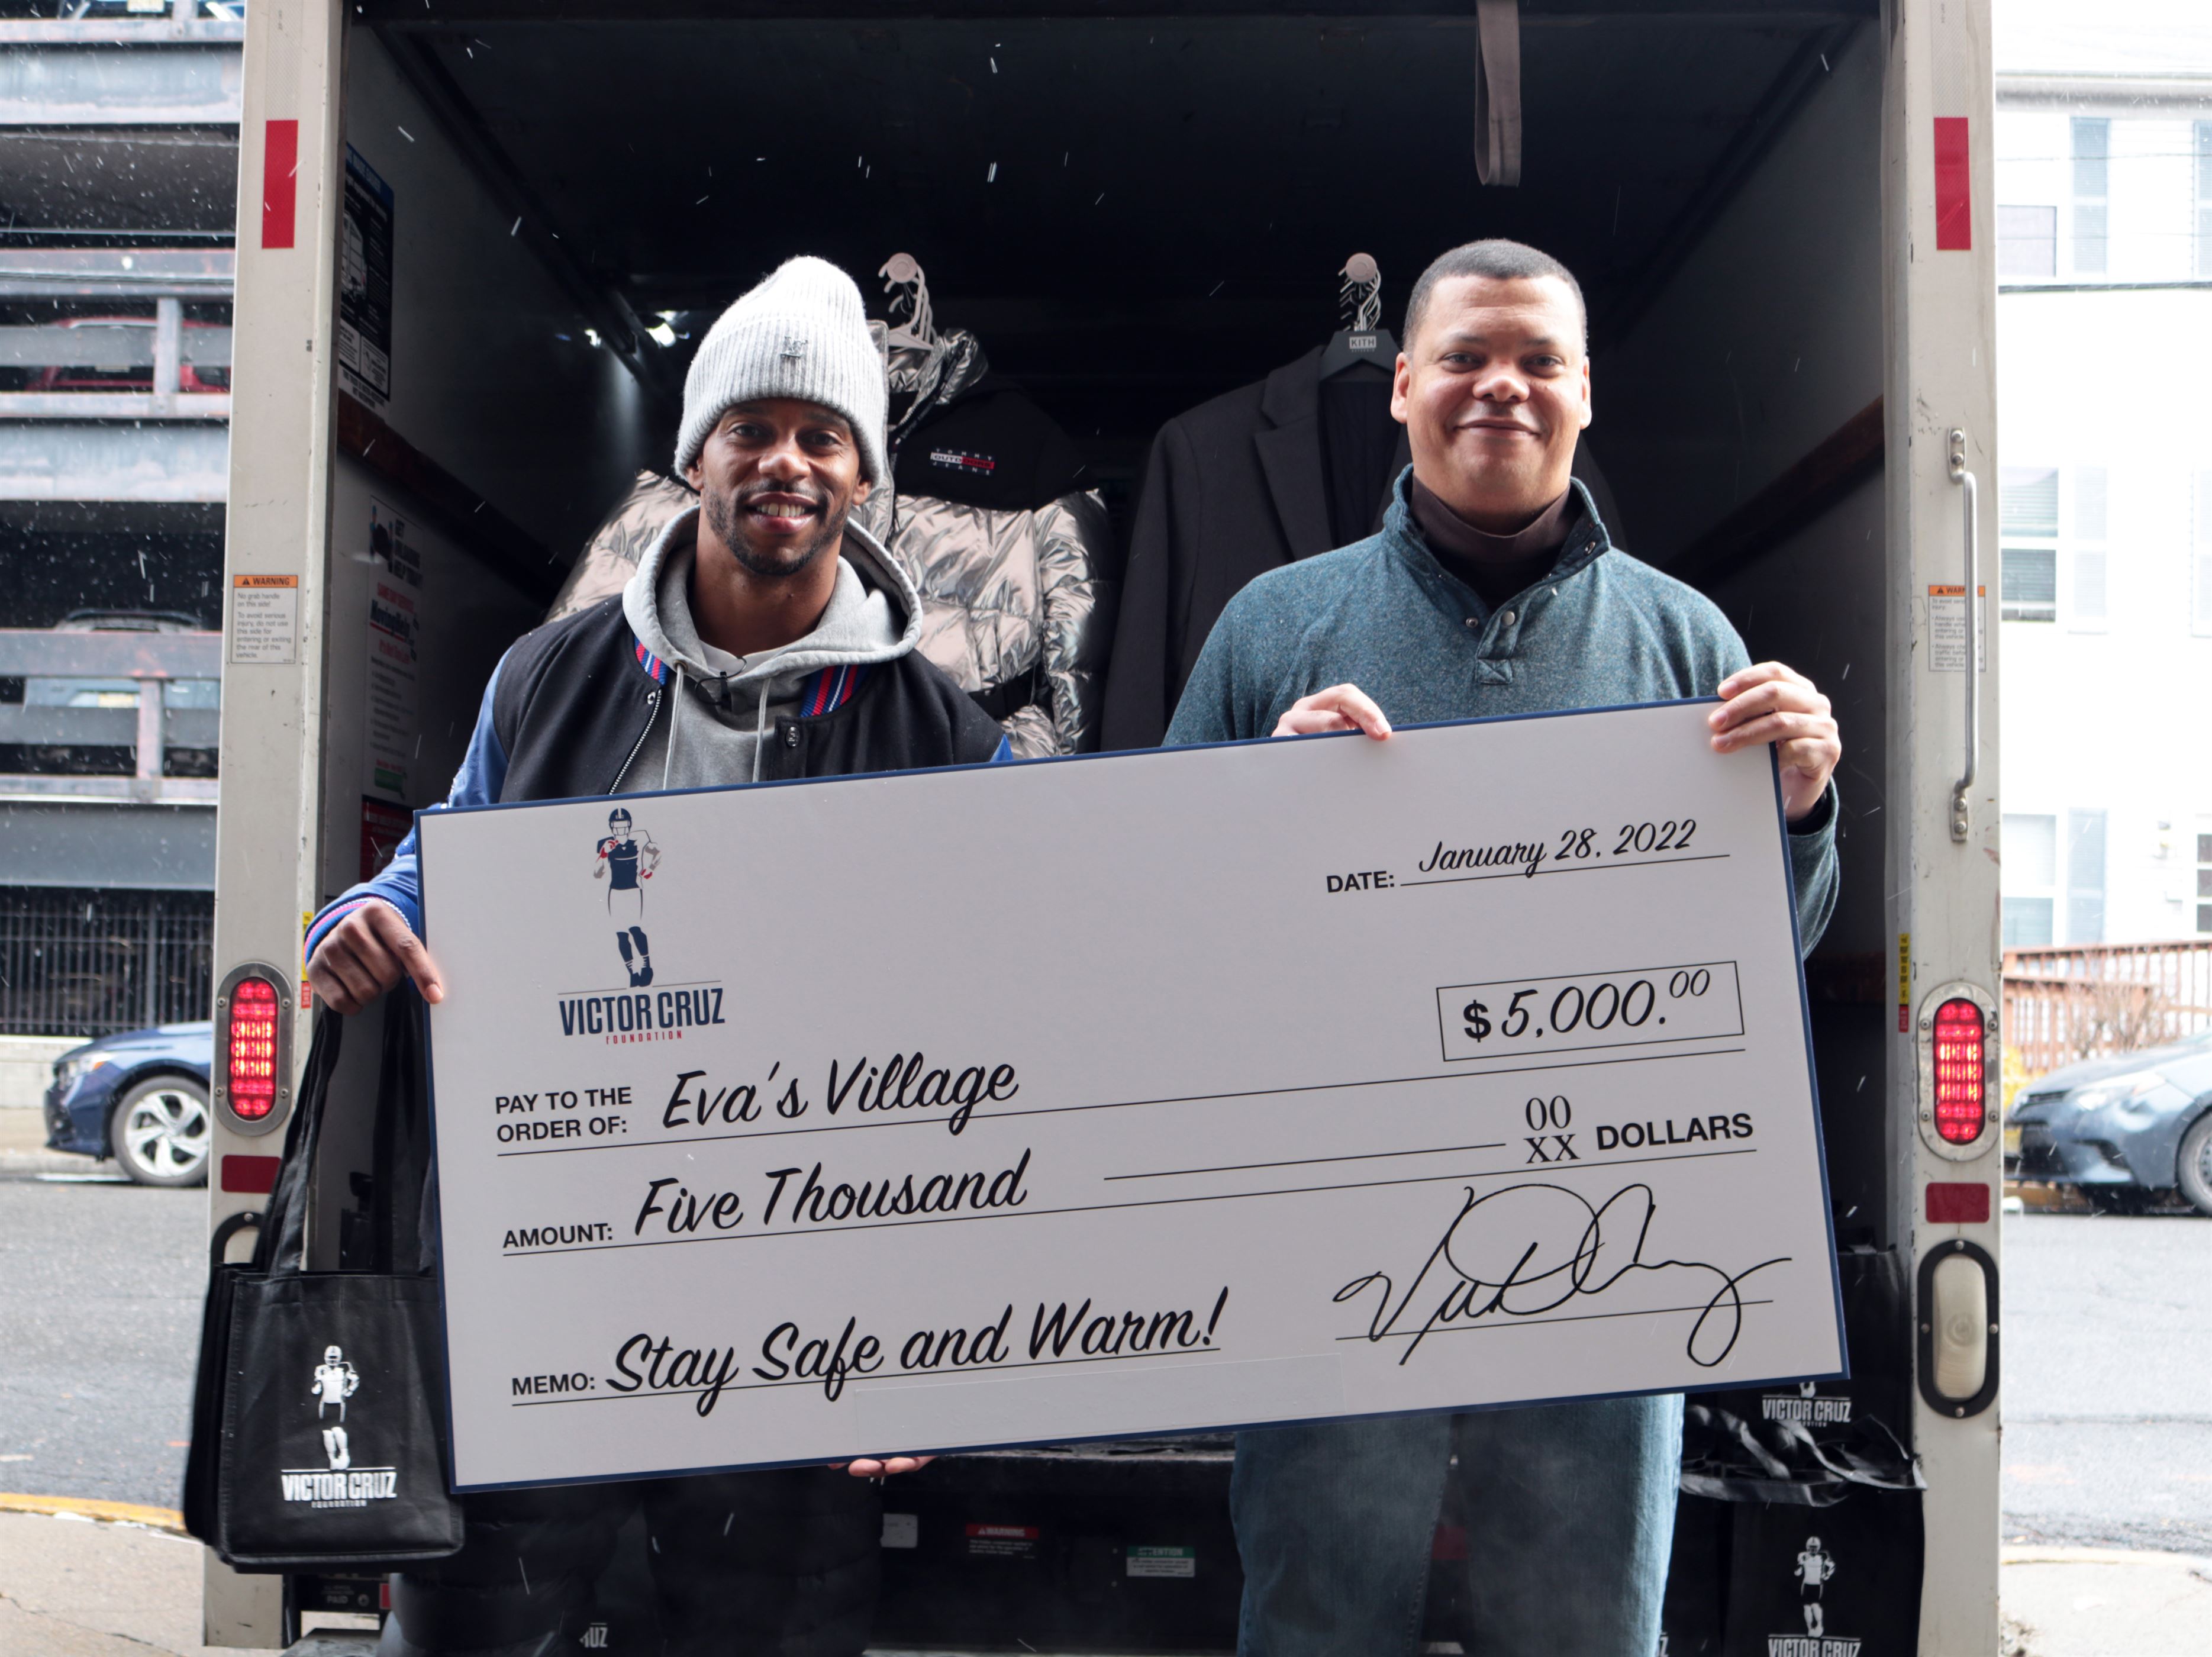 Victor Cruz (left) gives donations to the CEO of Eva's Village, Howard L. Haughton Photo courtesy of Monica Fernandez-Prato